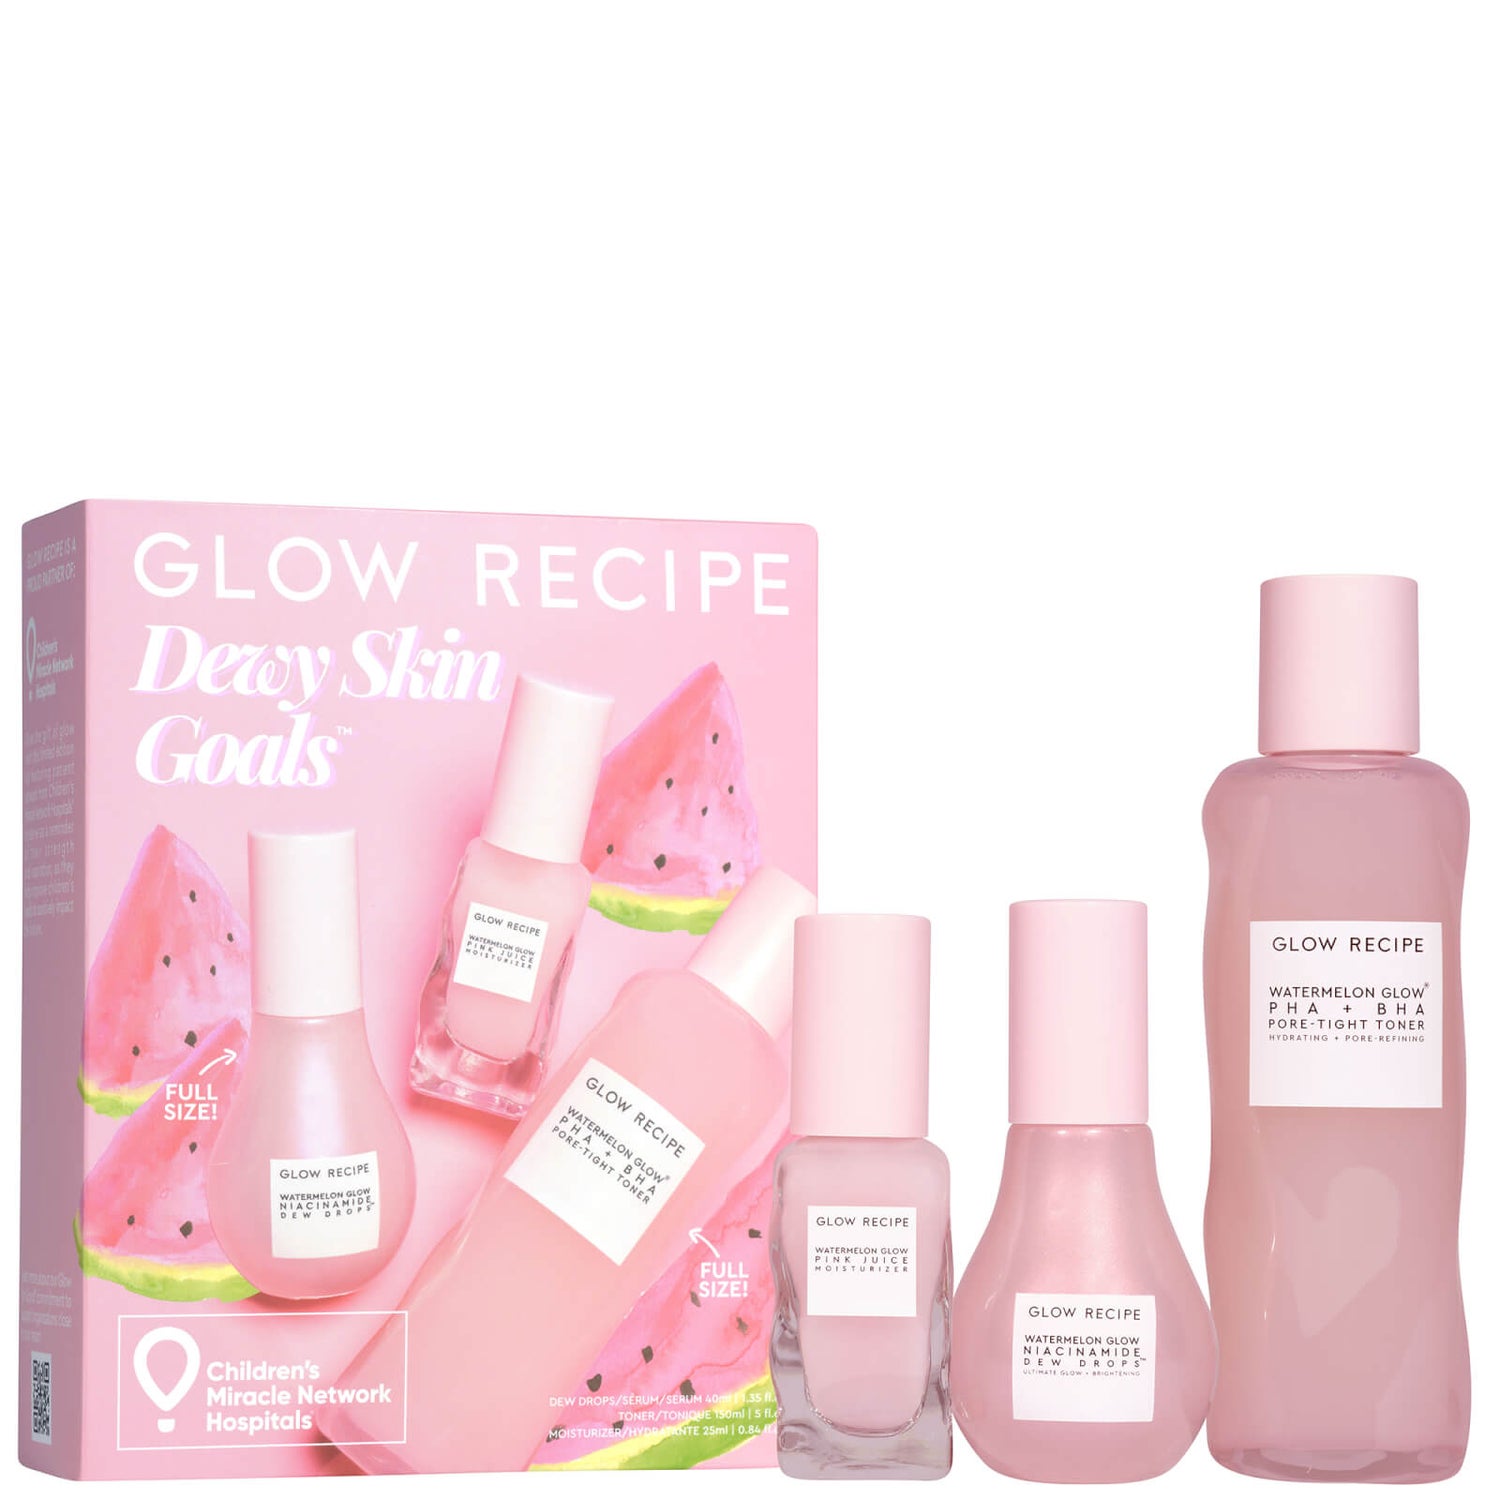 Glow Recipe Dewy Skin Goals (Worth 72) | Cult Beauty